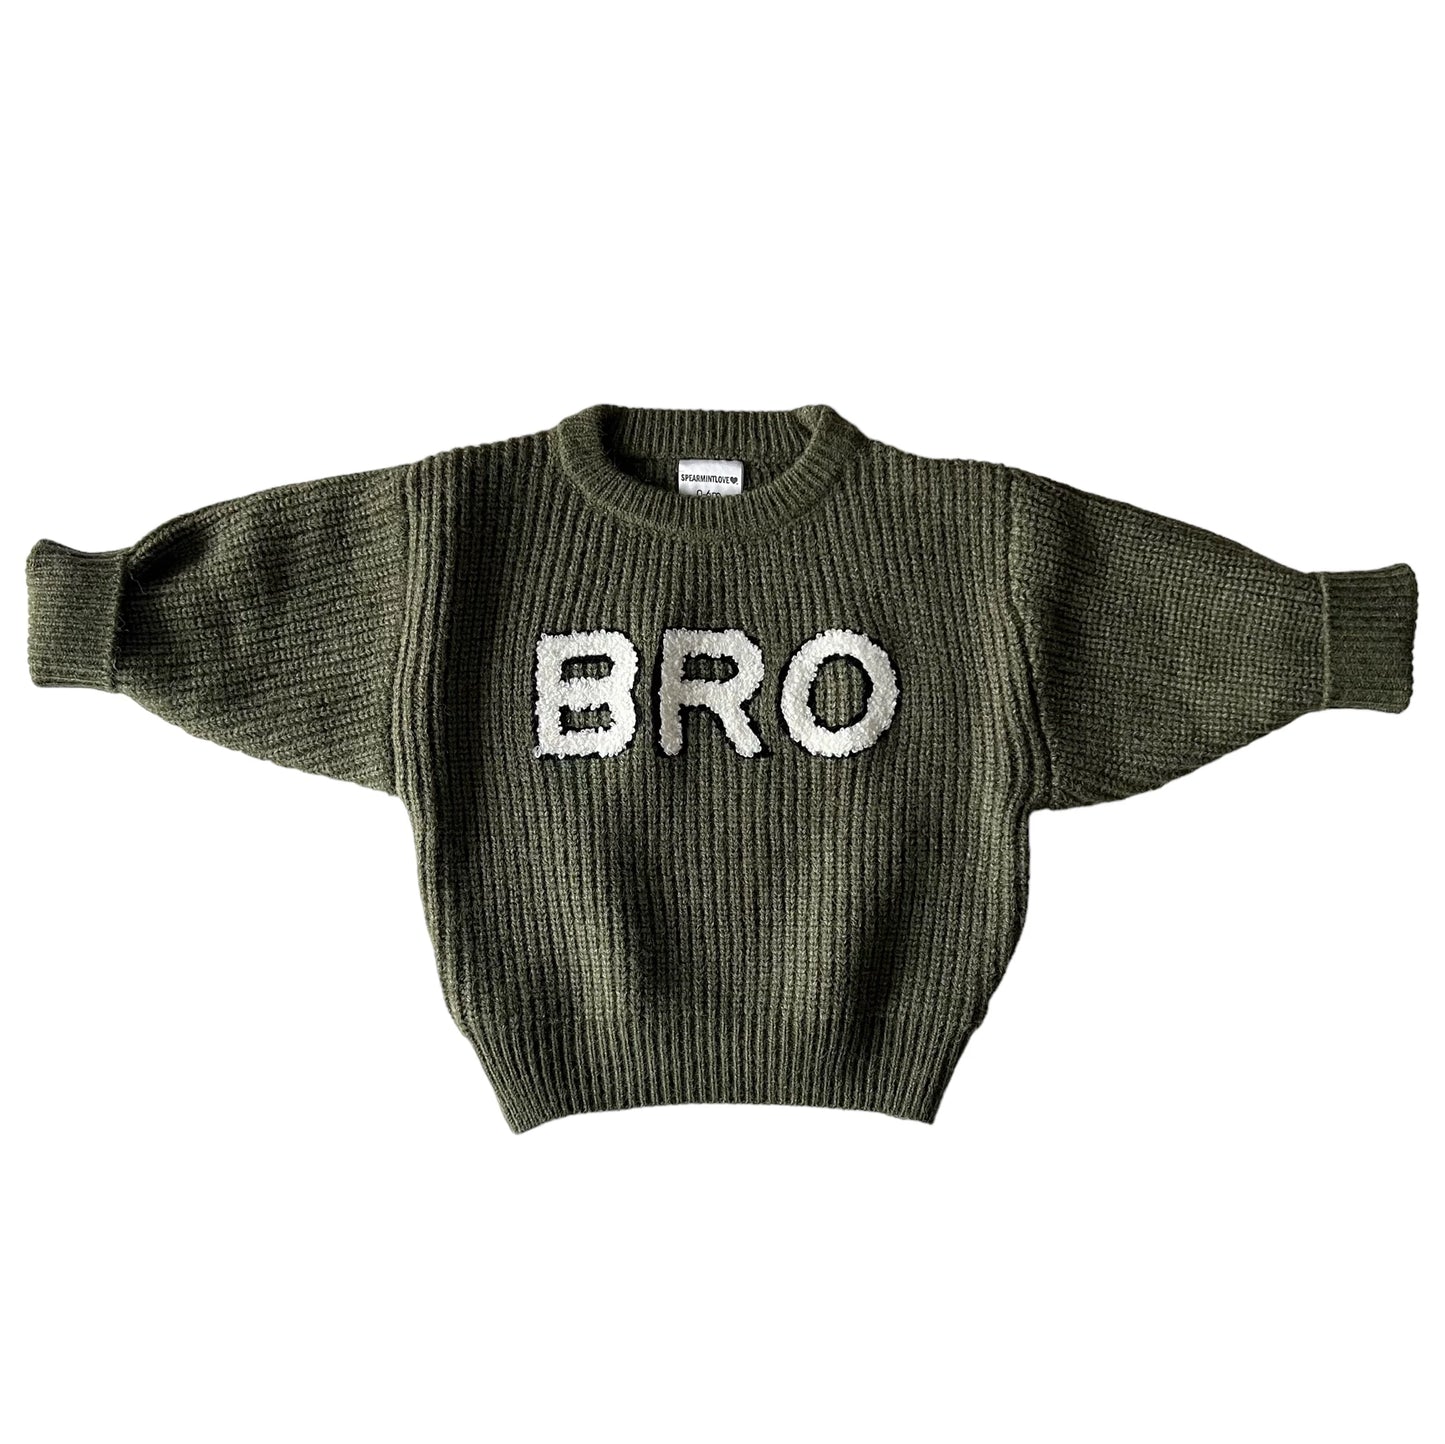 Bro Knit Sweater, Wilderness